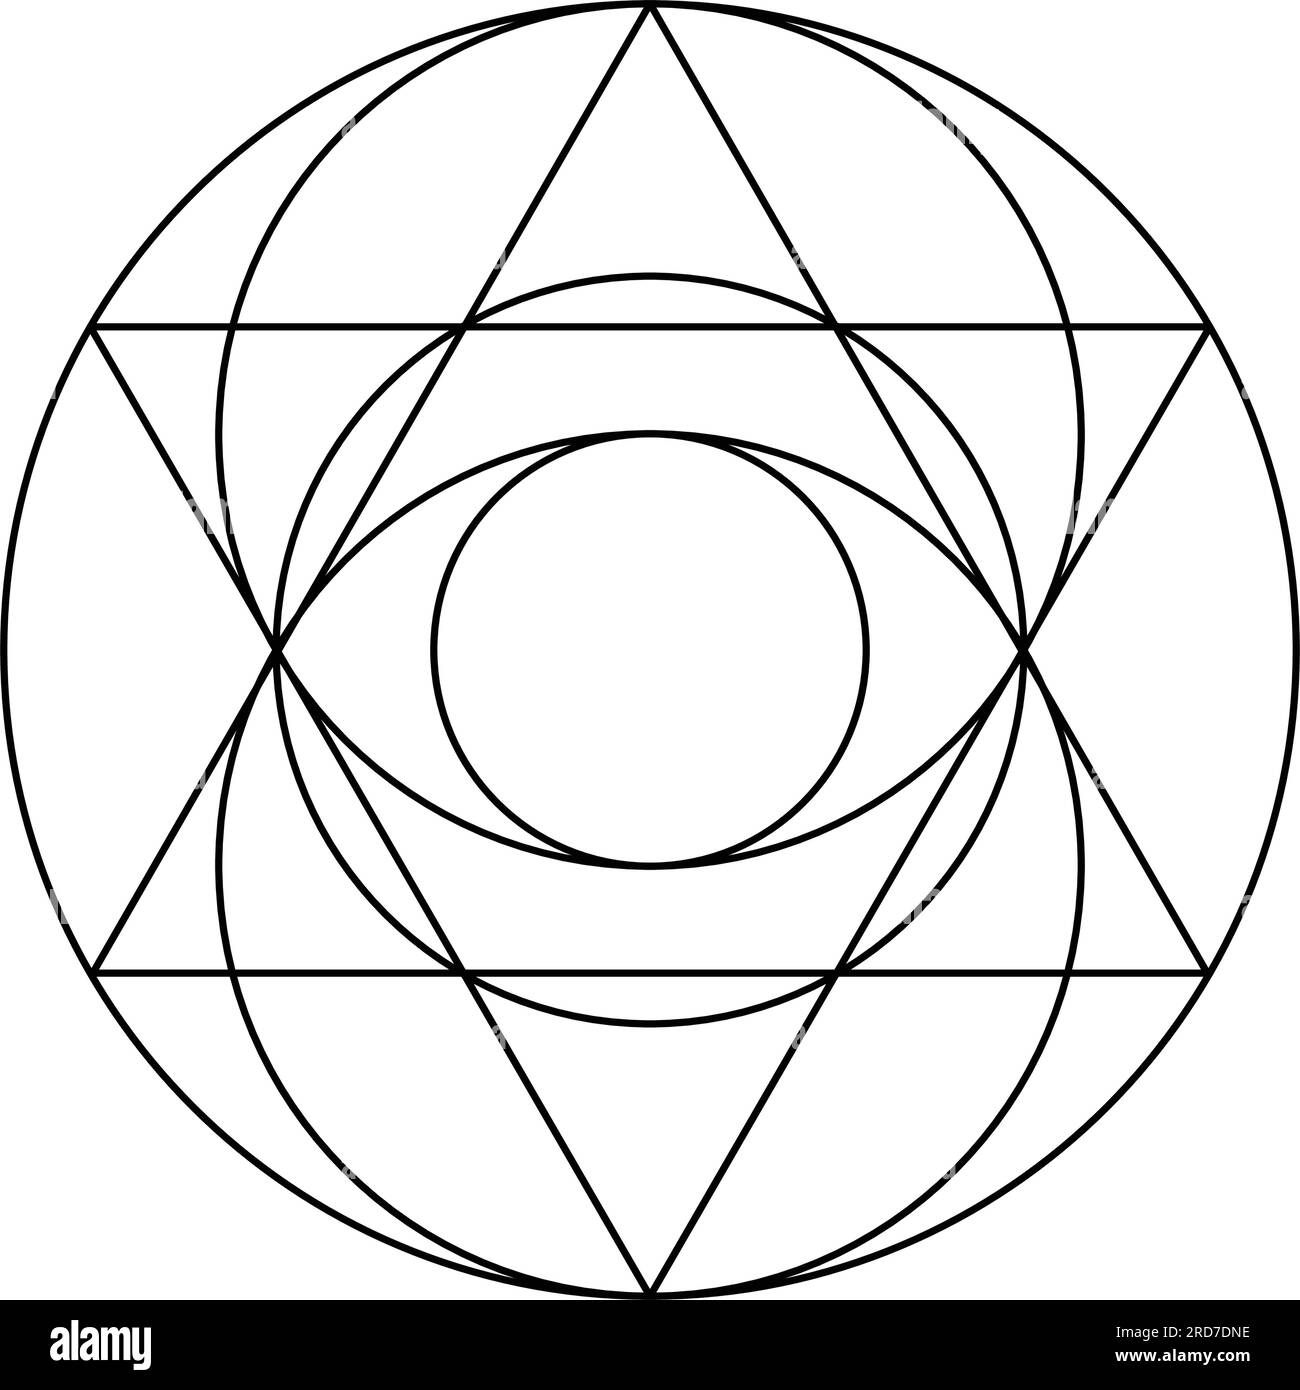 Visica piscis. Sacred Geometry Vector Design Elements. This religion, philosophy, and spirituality symbols. the world of geometric mystic mandalas. Stock Vector